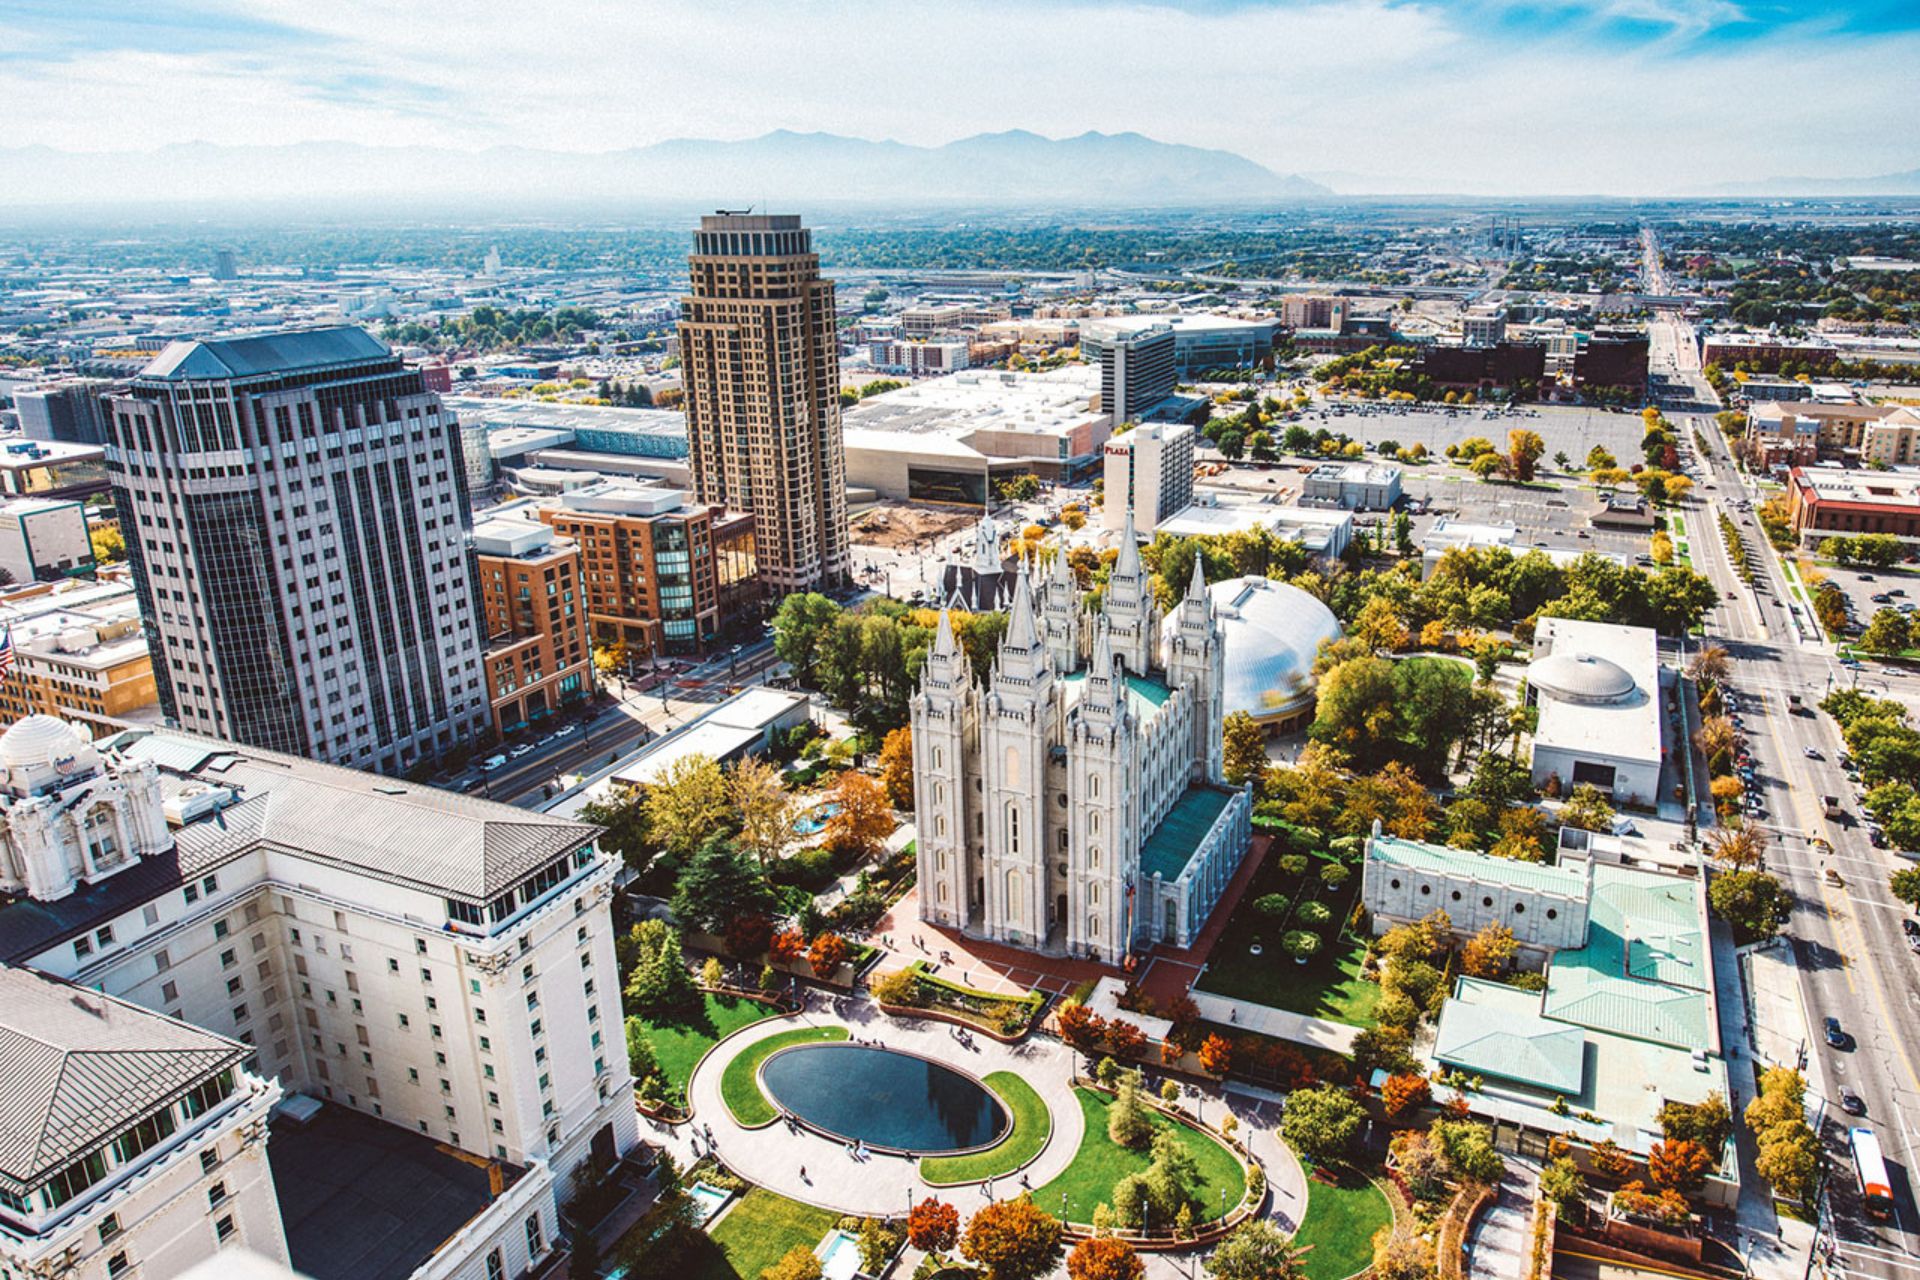 Aerial view of Temple Square in Salt Lake City, UT